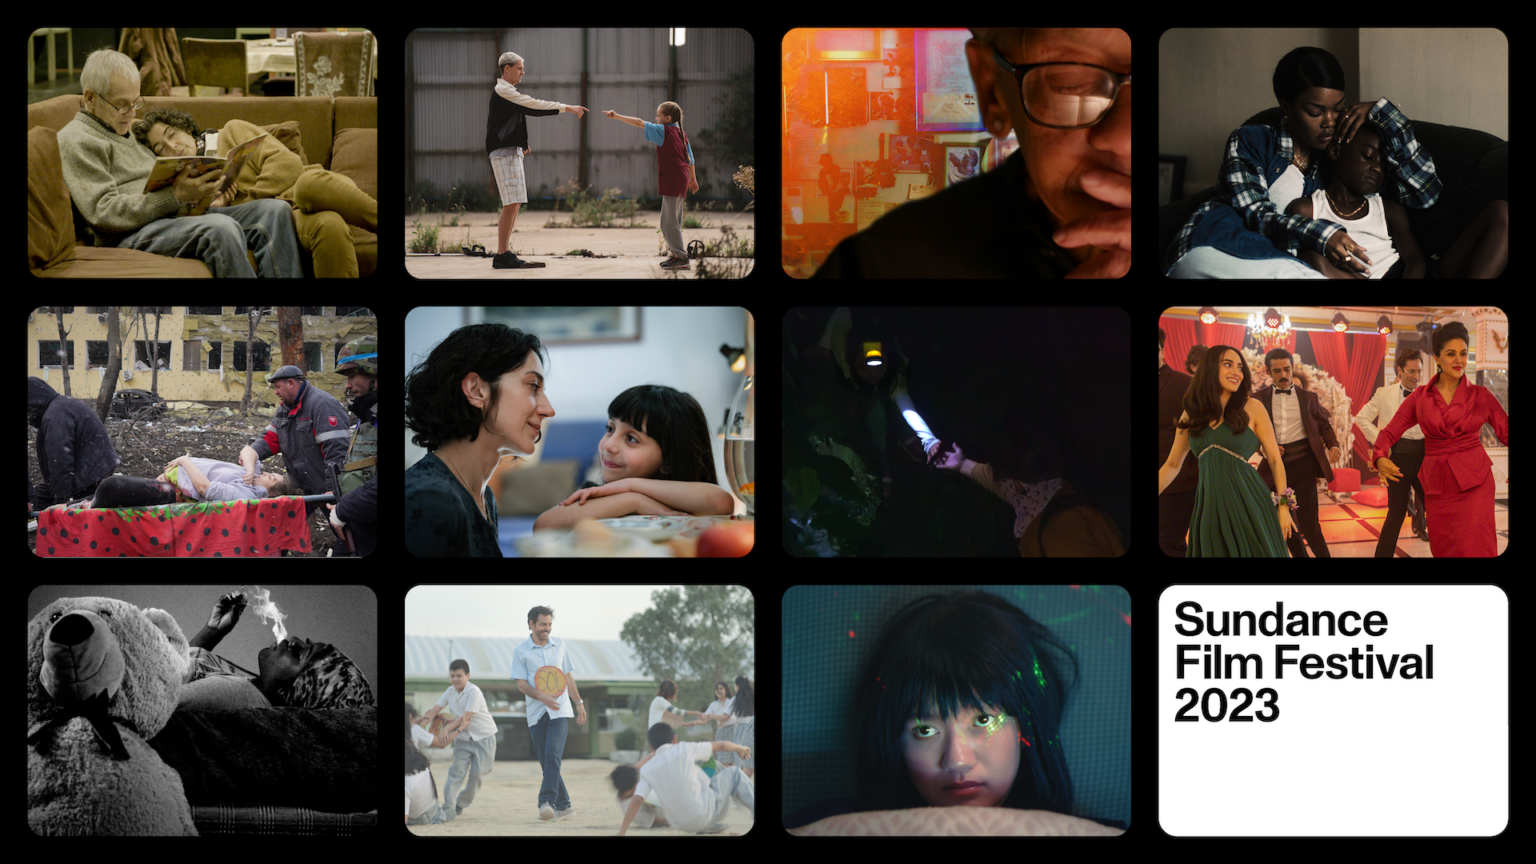 The Complete List of 2023 Sundance Film Festival Award Winners